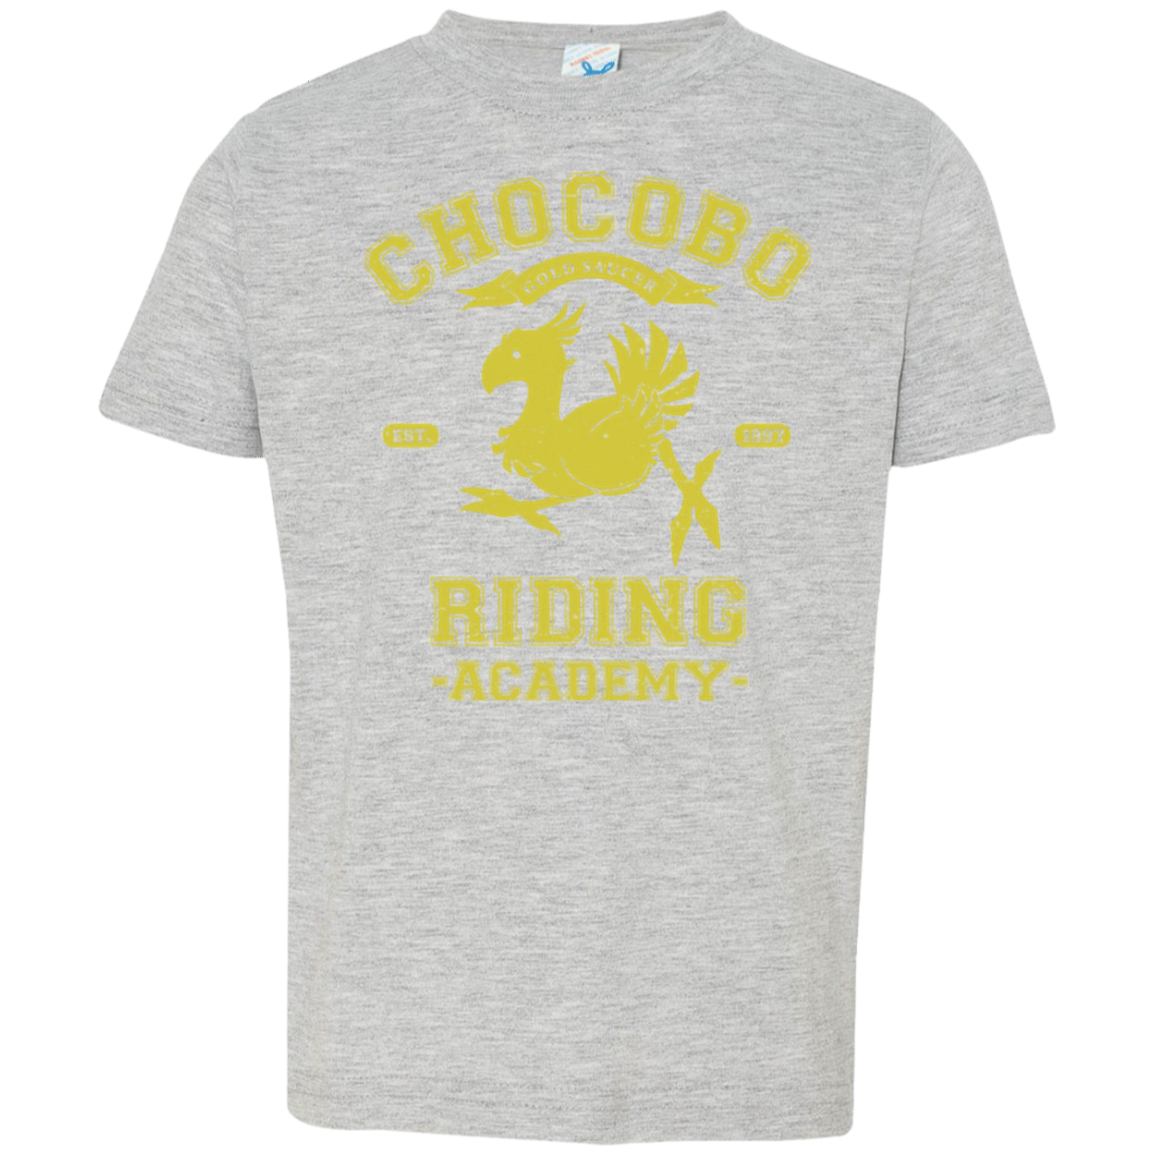 Riding Academy Toddler Premium T-Shirt